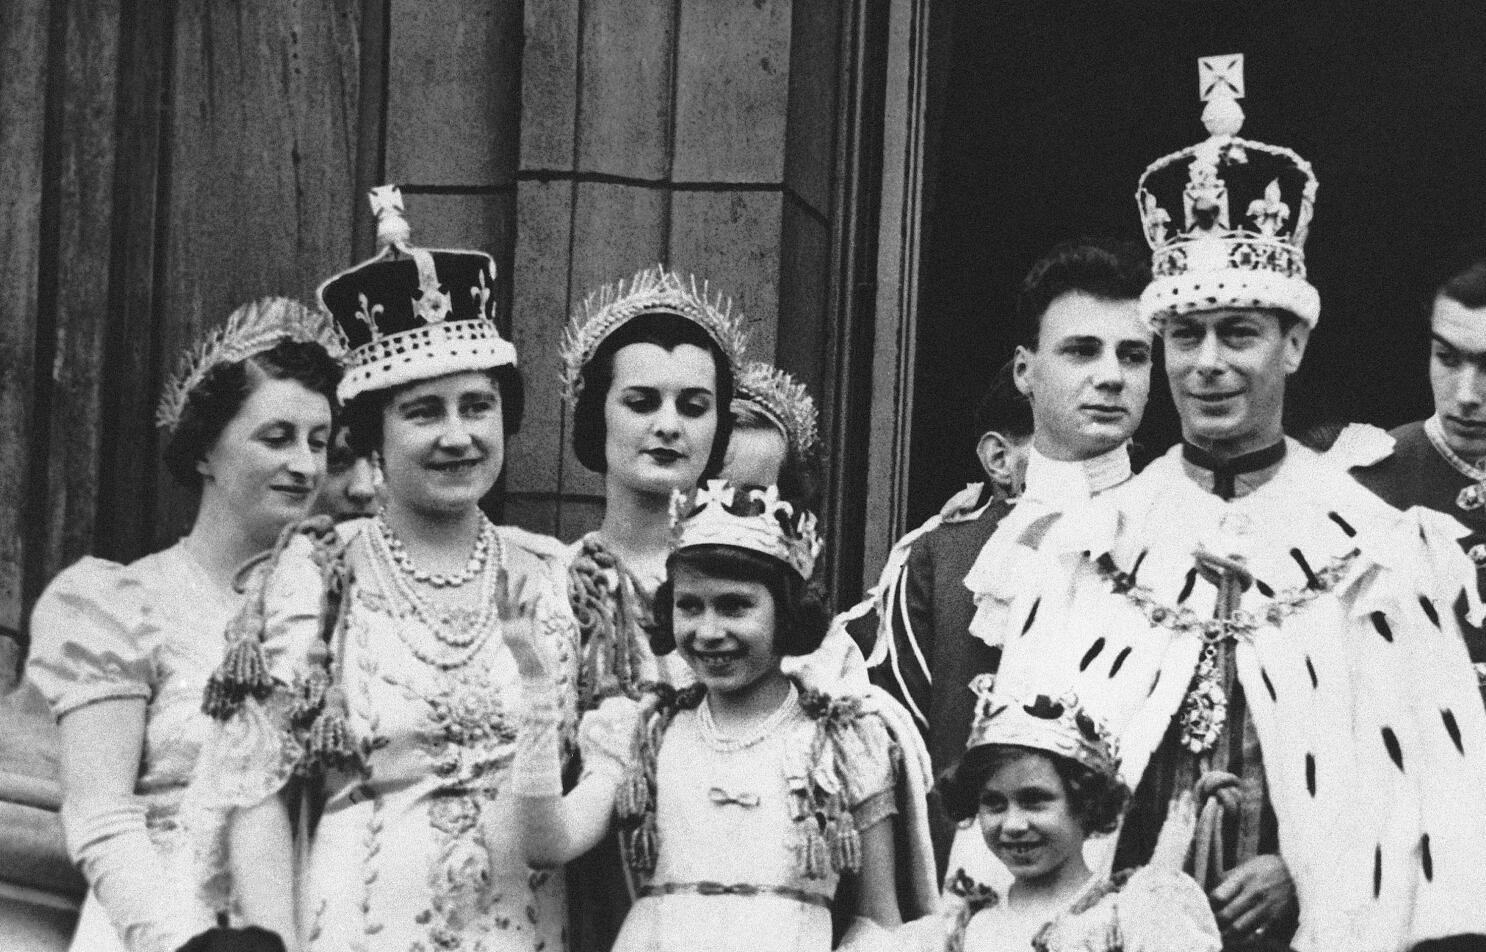 Queen Elizabeth II - Childhood, Coronation & Death